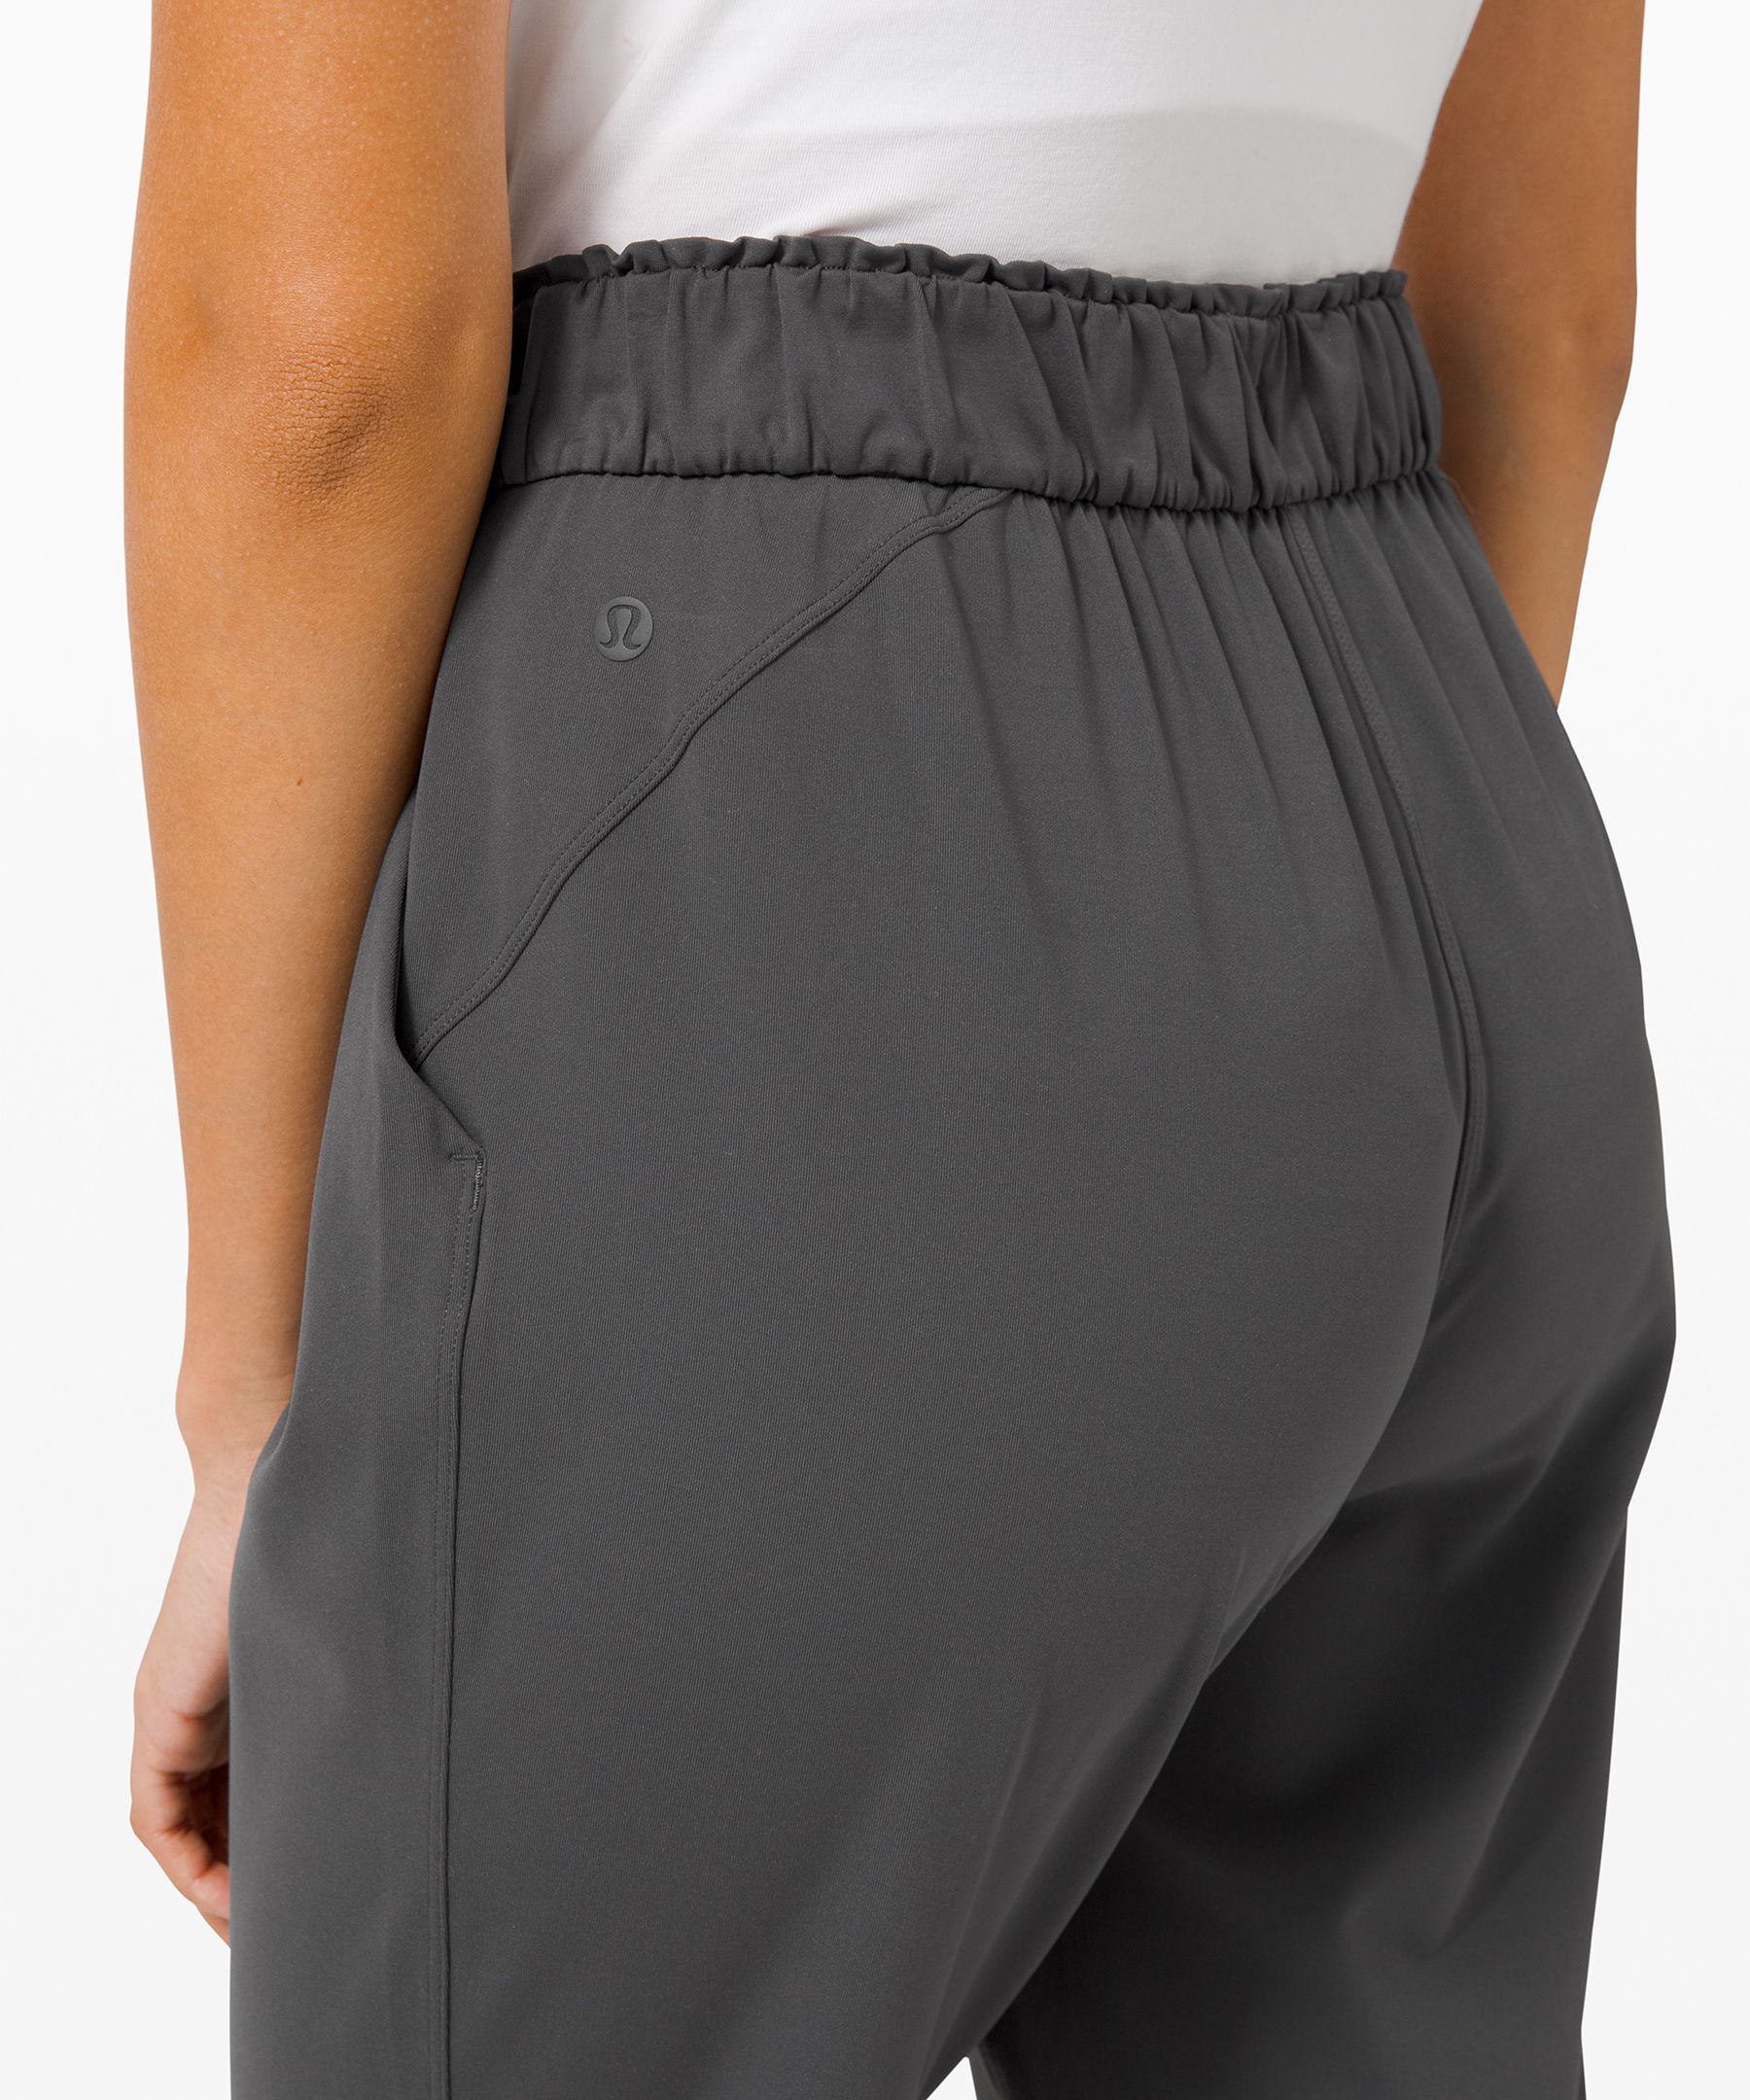 Lululemon Women's Keep Moving High Rise Full Length Pants Size 2 - NWT